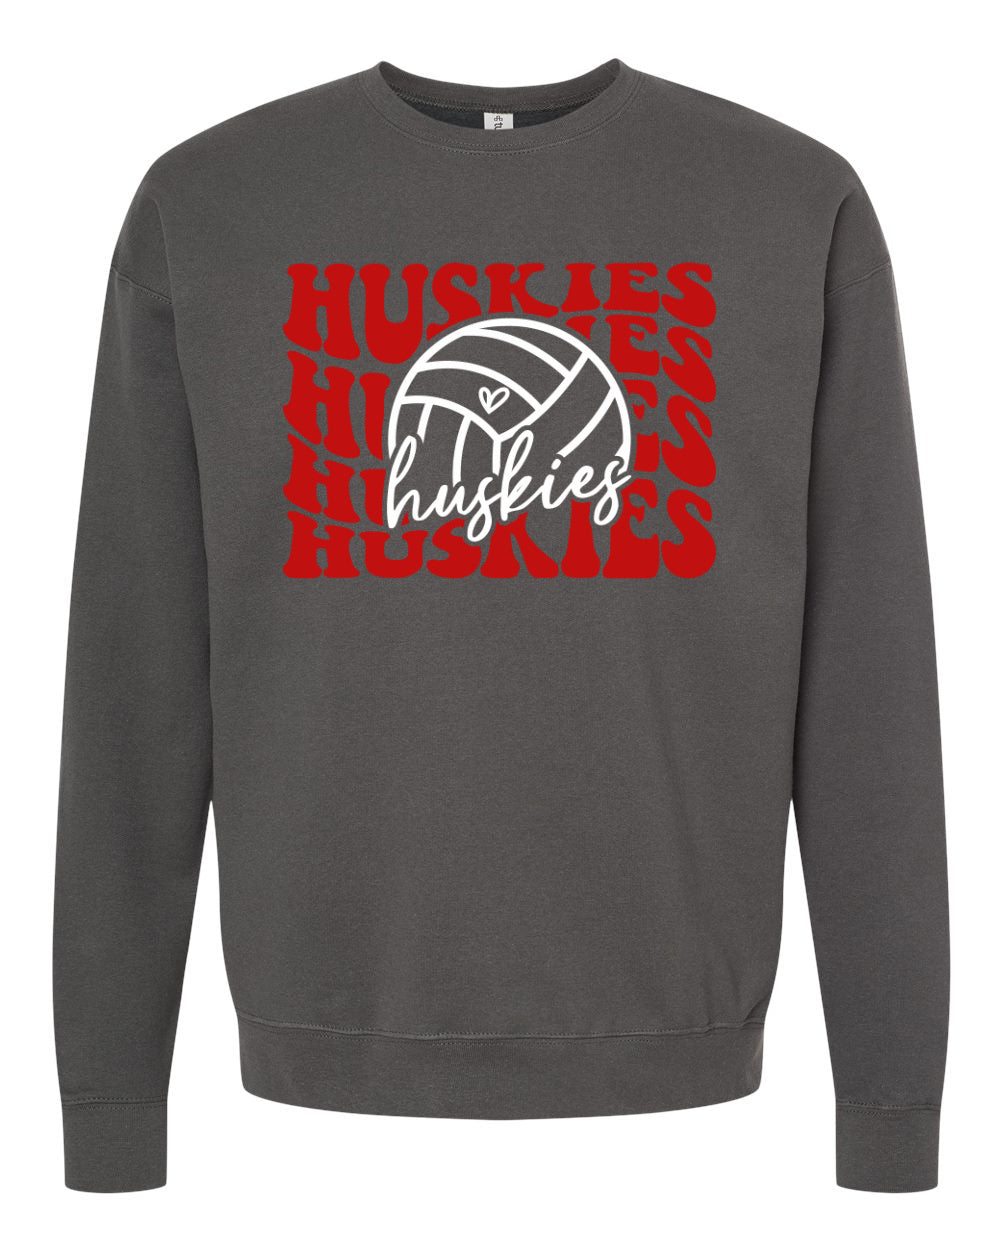 Huskies volleyball sweatshirt